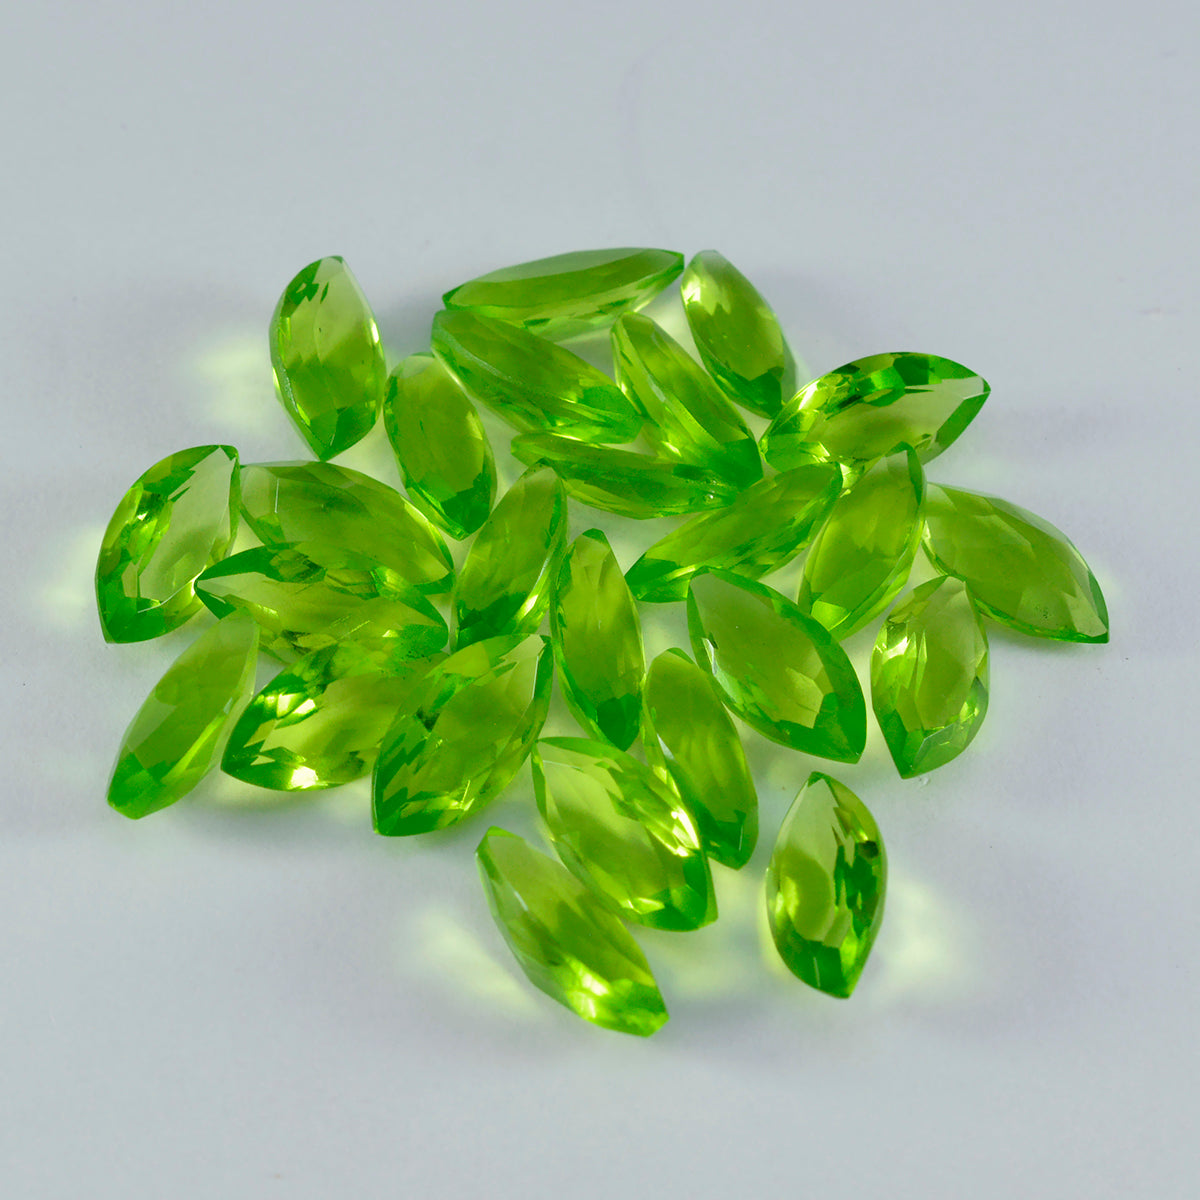 Riyogems 1PC Green Peridot CZ Faceted 5x10 mm Marquise Shape A+ Quality Loose Gems